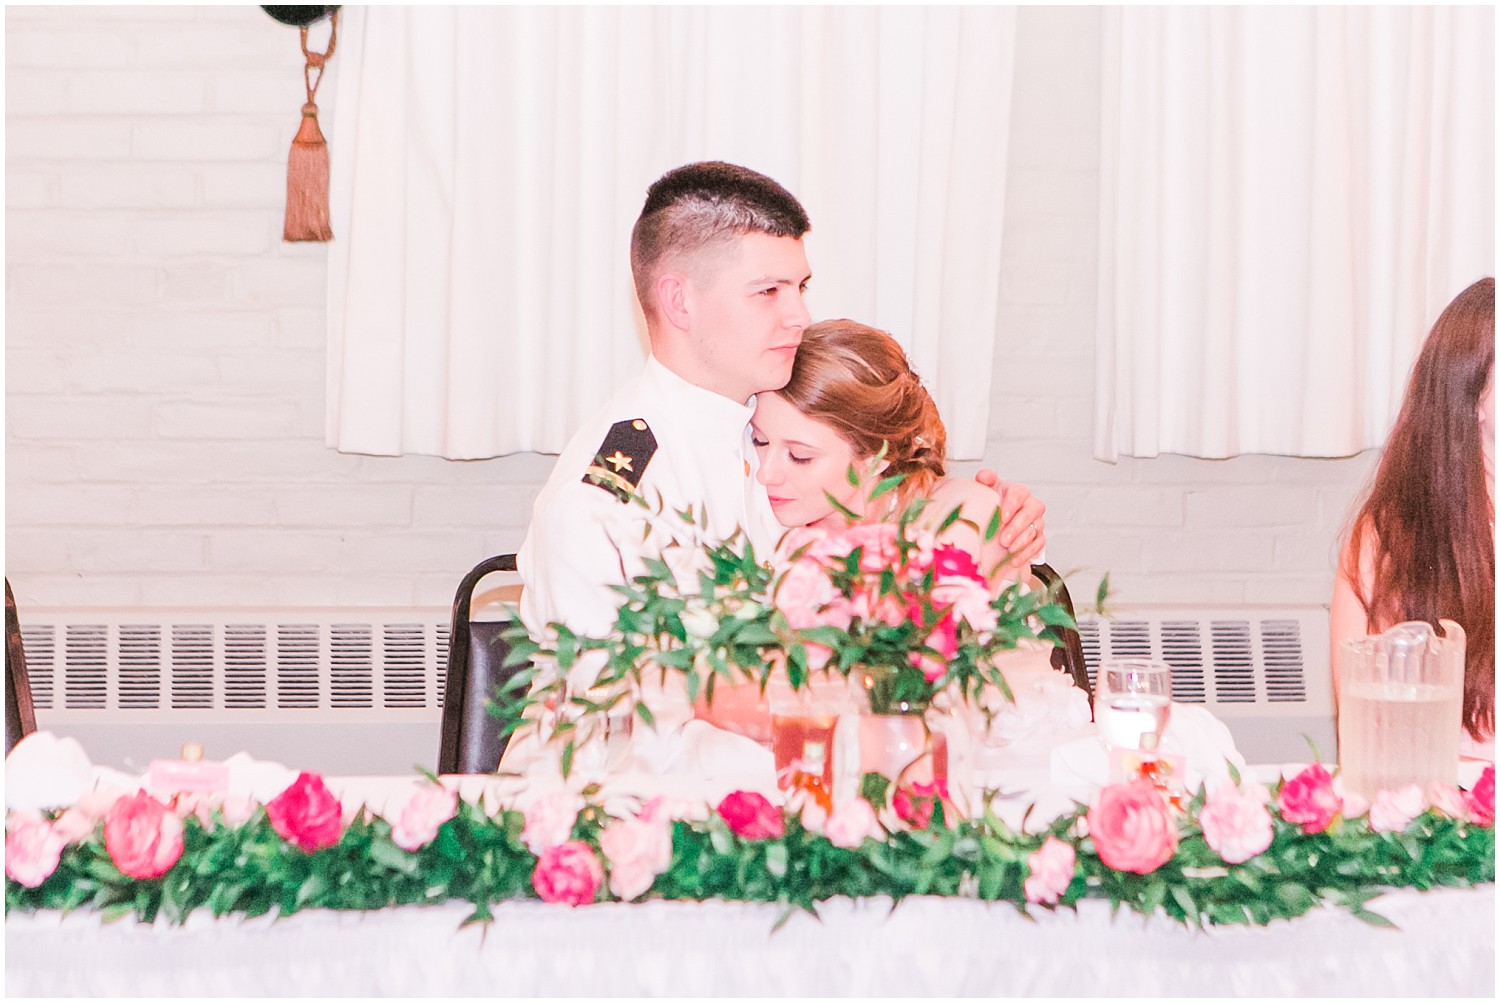 Waterbury Congregational Church Wedding | Zack & Katelyn